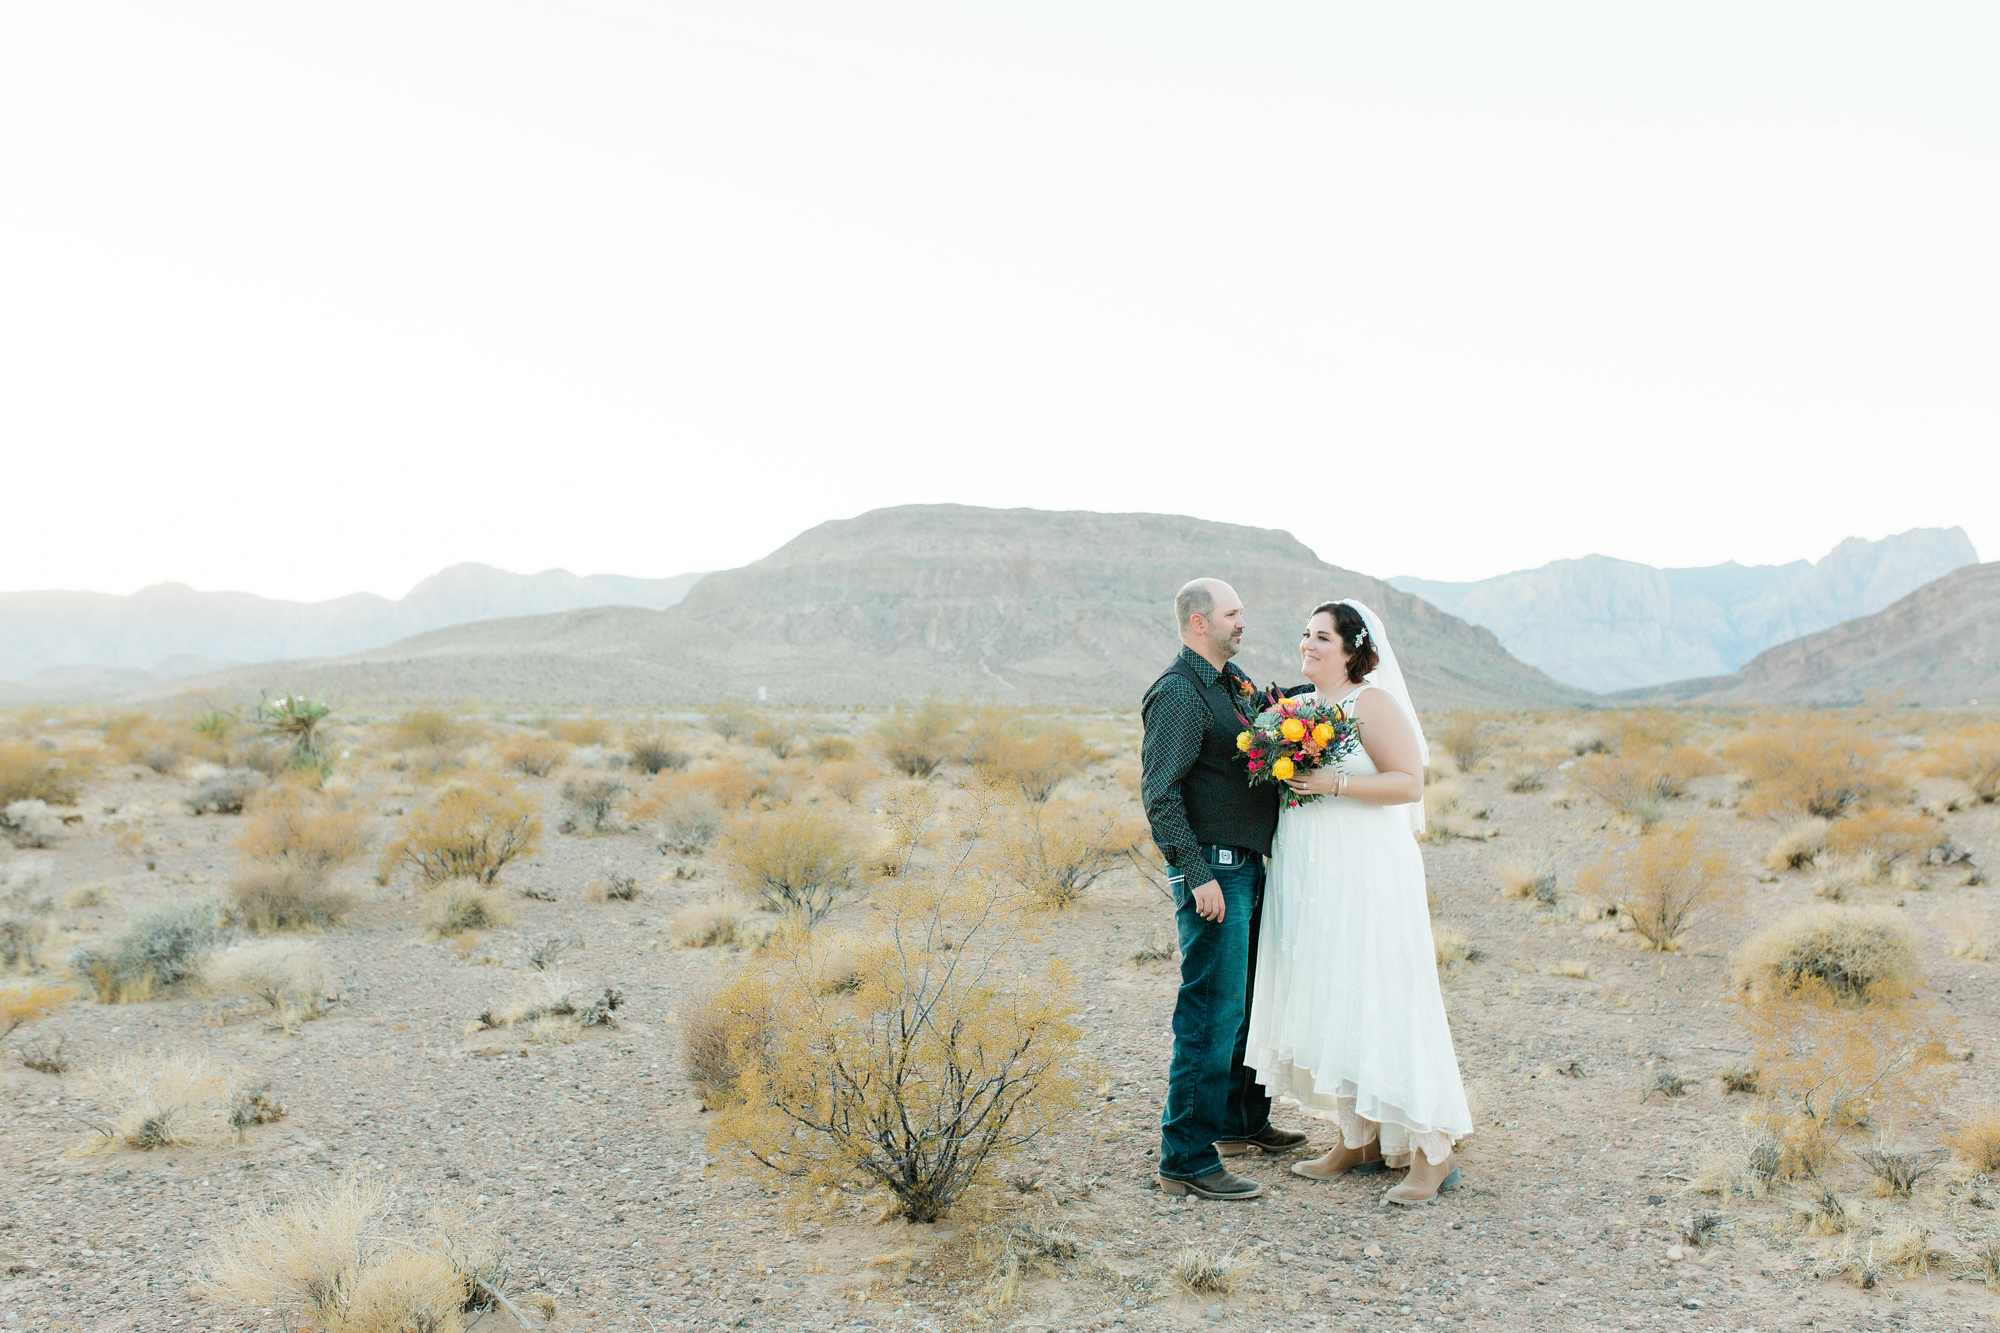 Heather + Charles: A Real Wedding in Cactus Joe’s